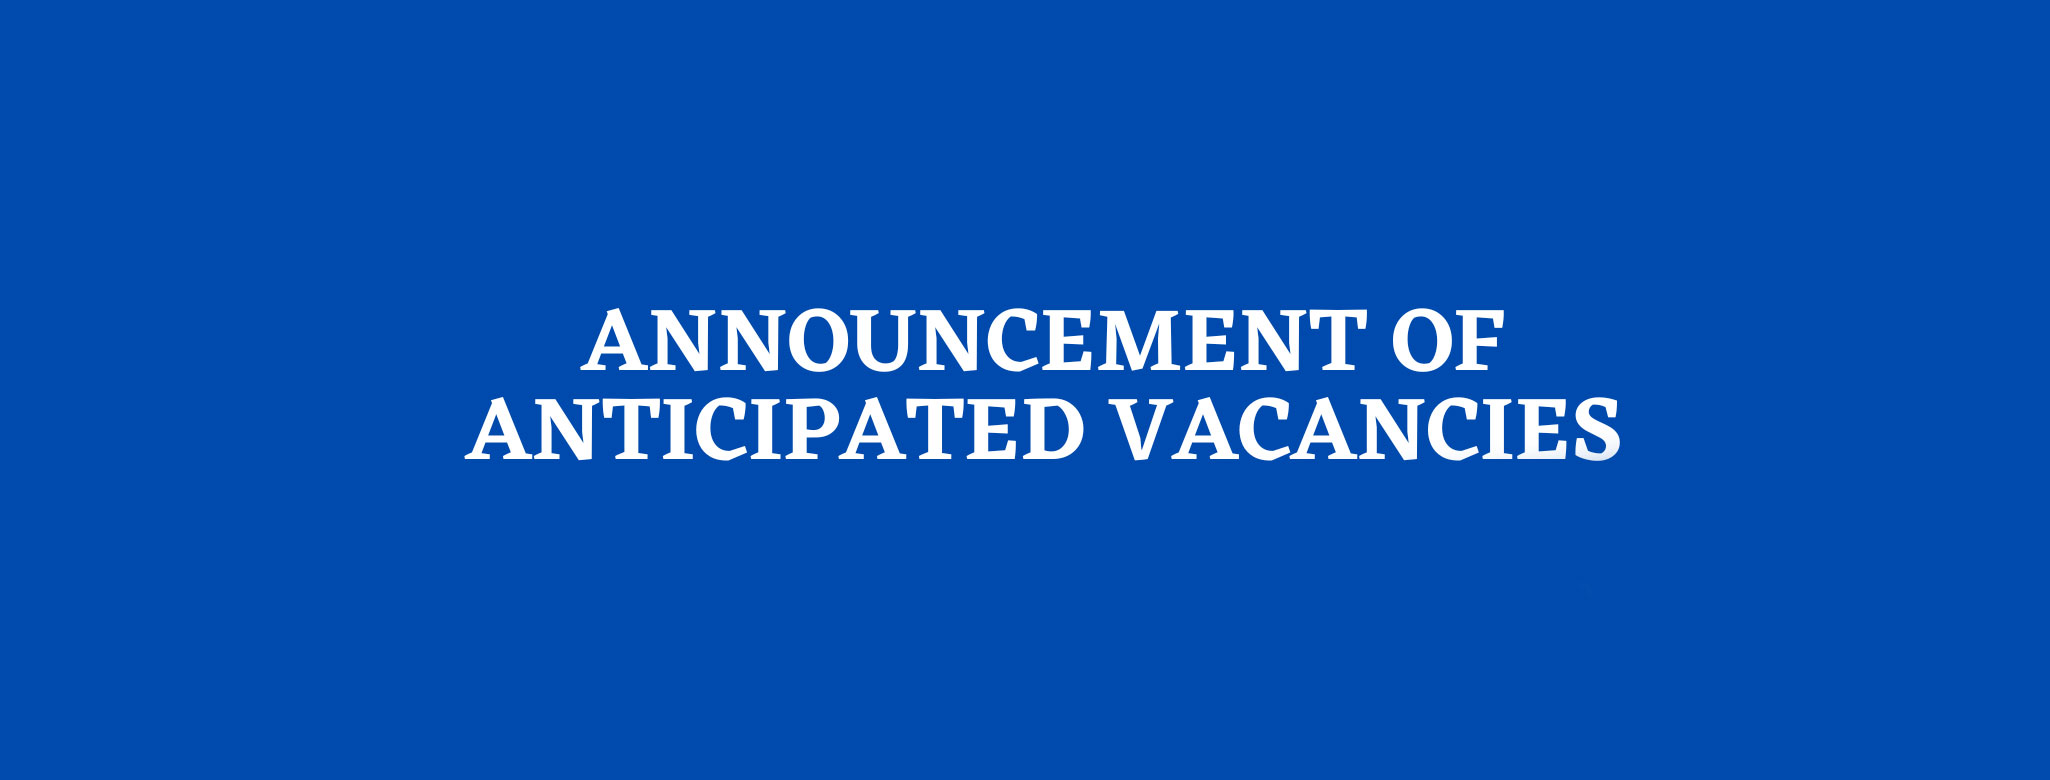 Announcements Anticipated Vacancies 2022-2023 School Year